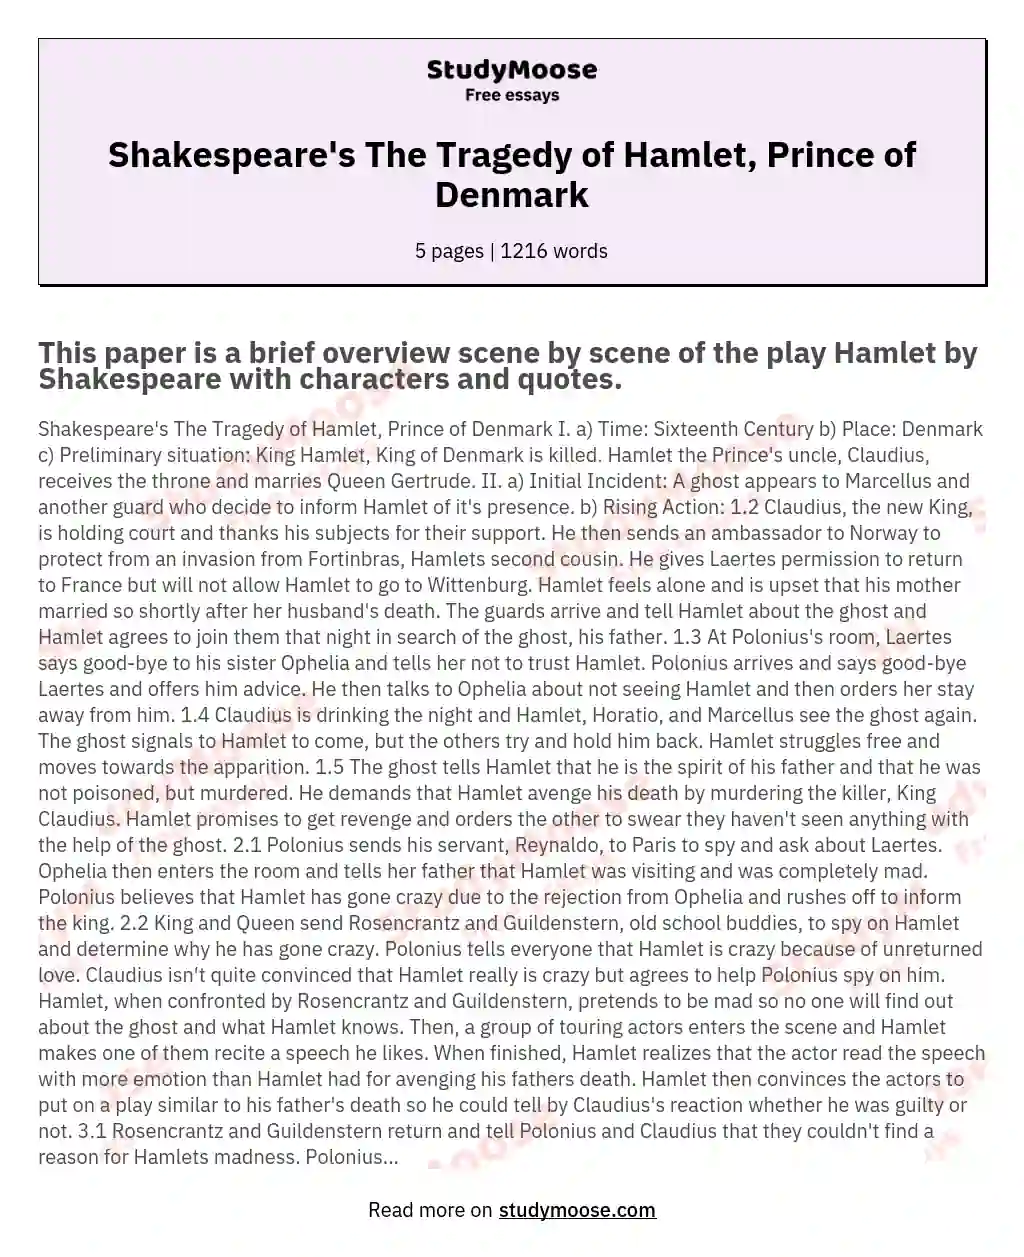 Shakespeare's The Tragedy of Hamlet, Prince of Denmark